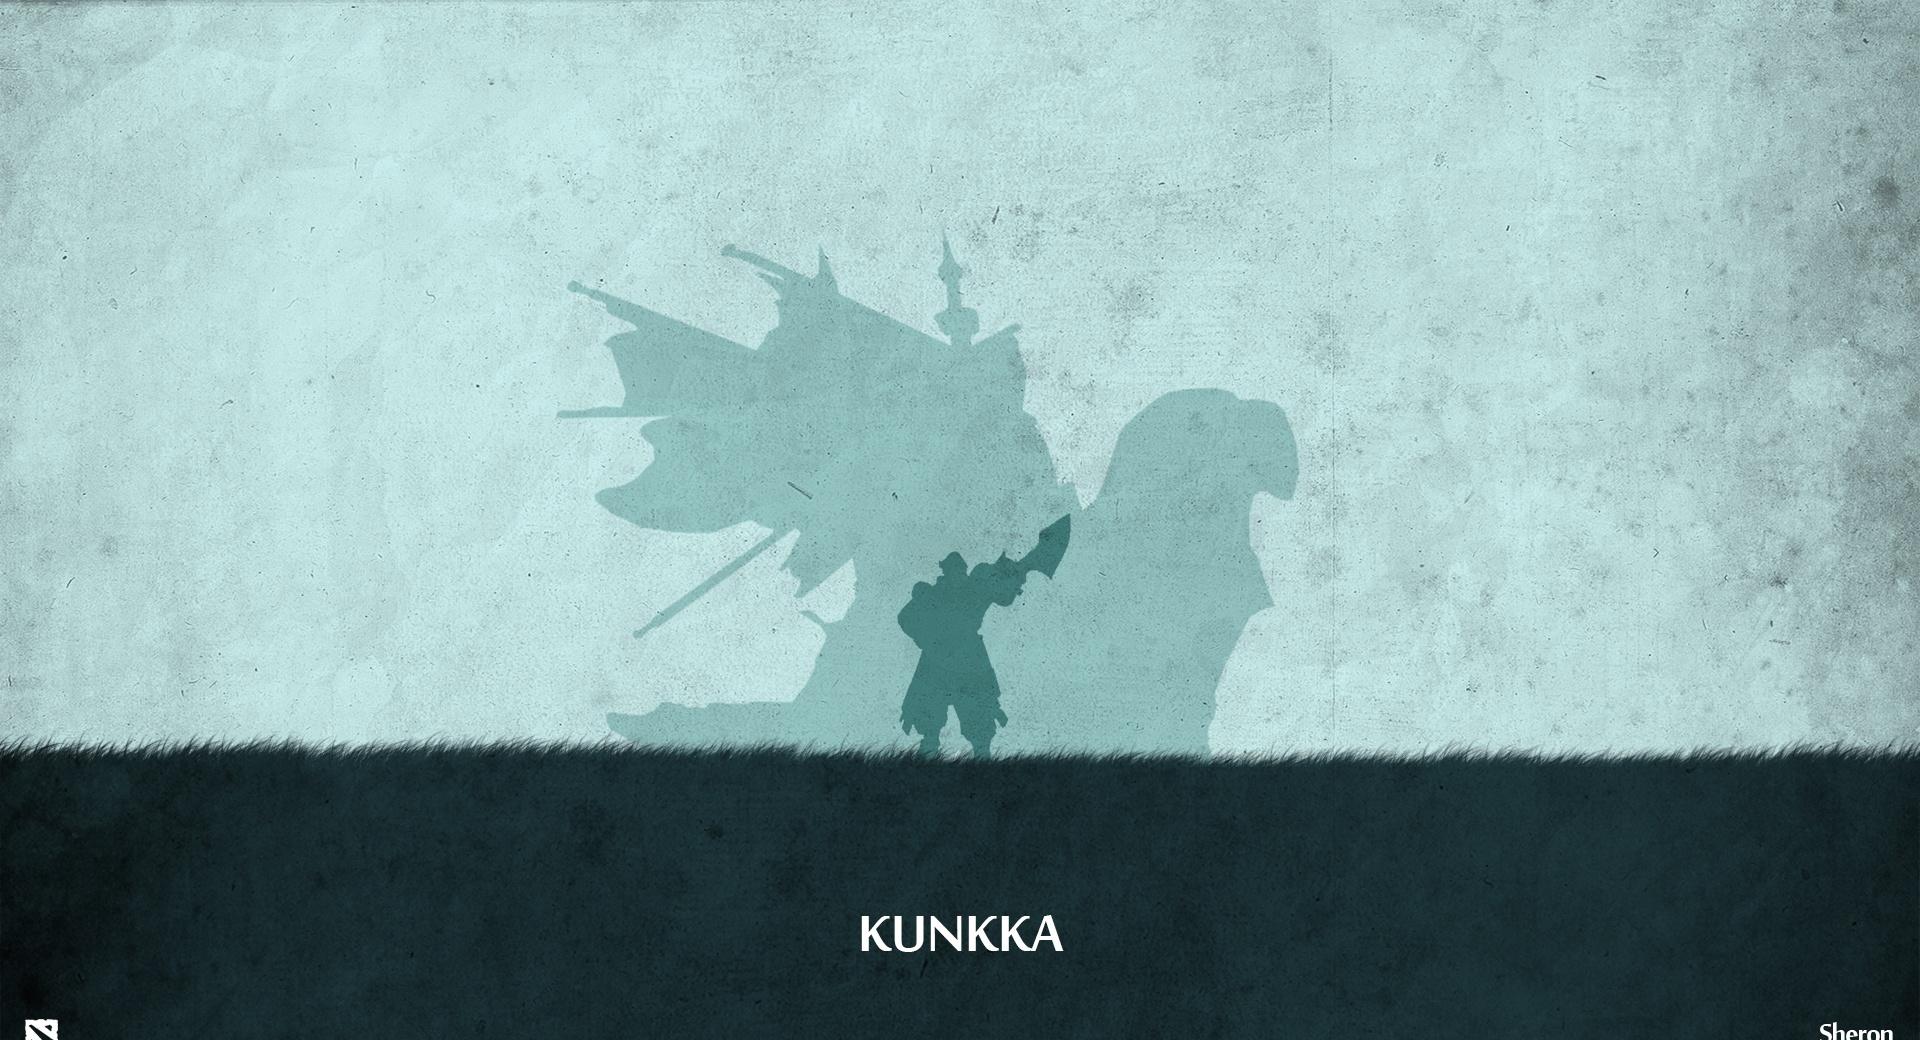 Kunkka - DotA 2 at 1024 x 1024 iPad size wallpapers HD quality